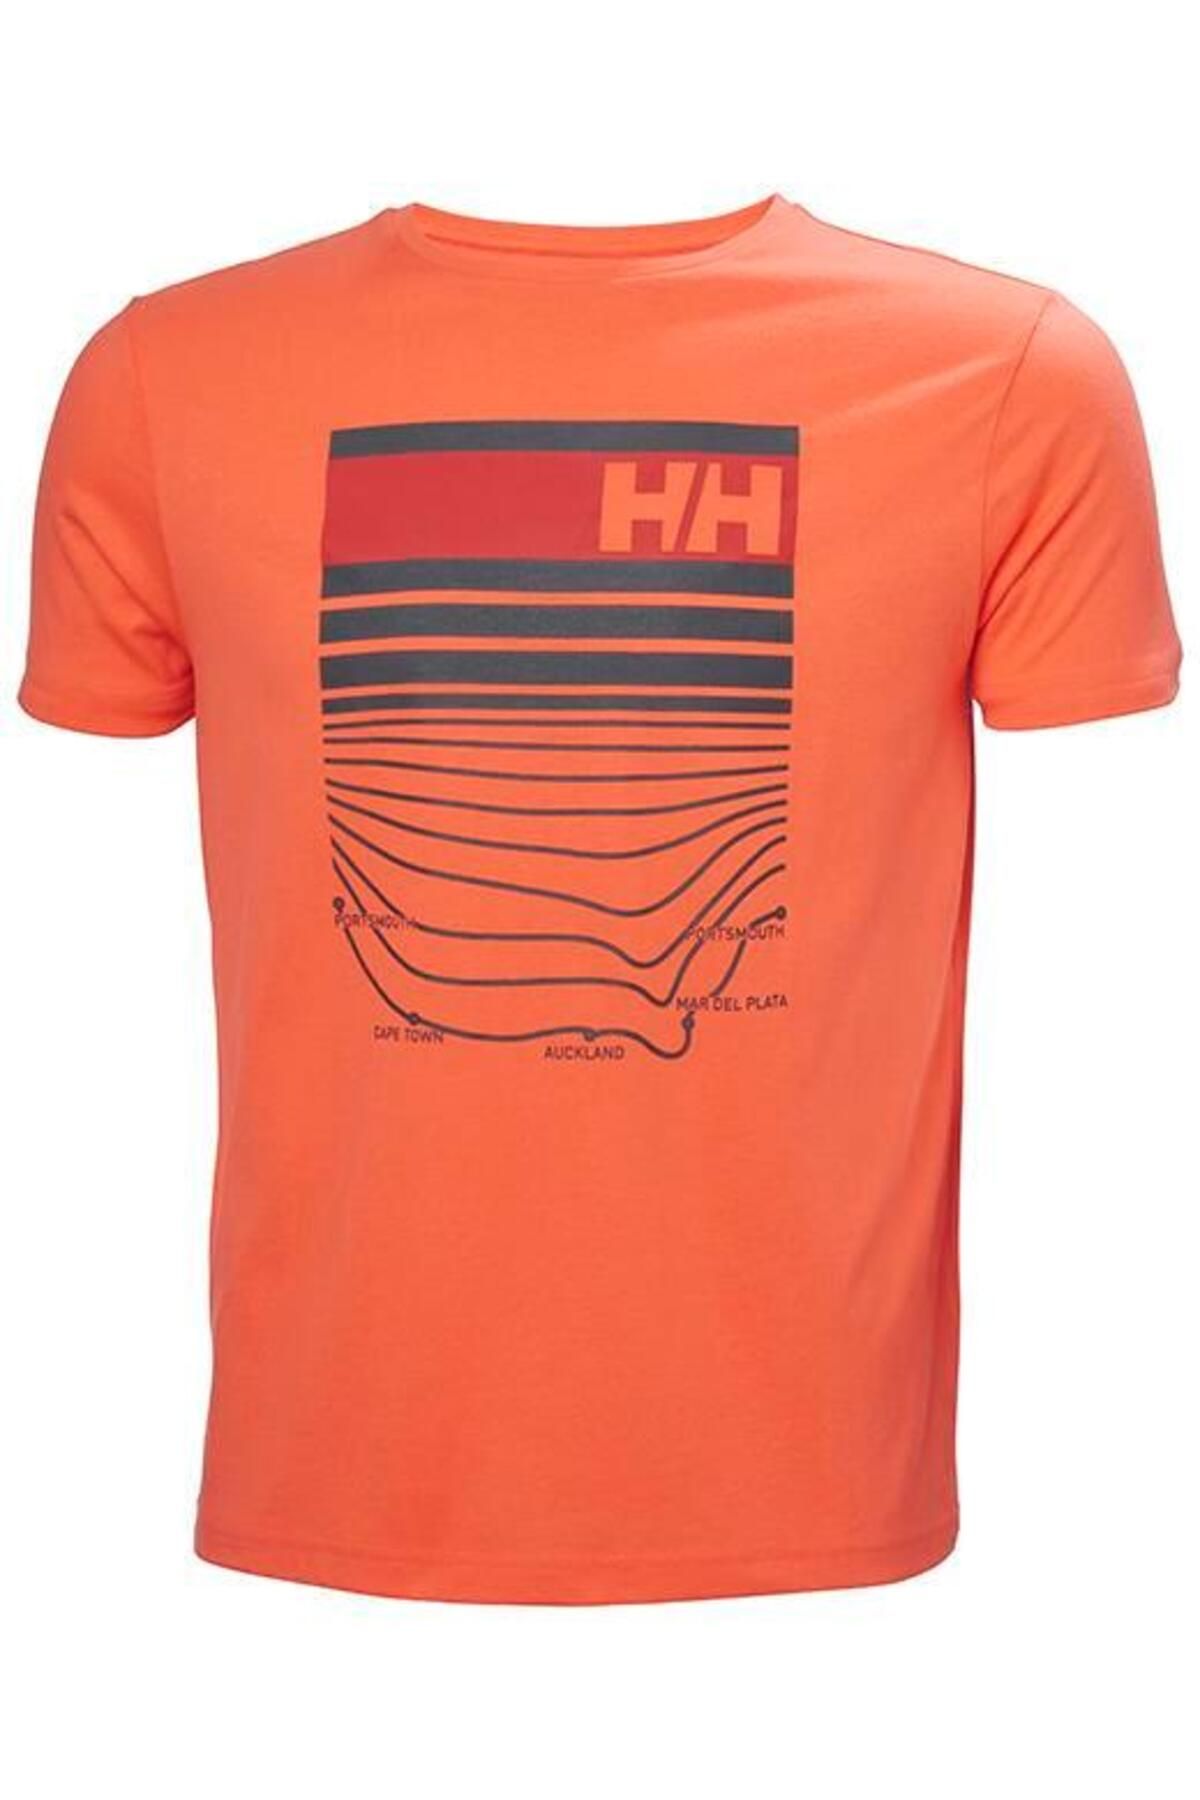 Helly Hansen Hh Shoreline T-shirt